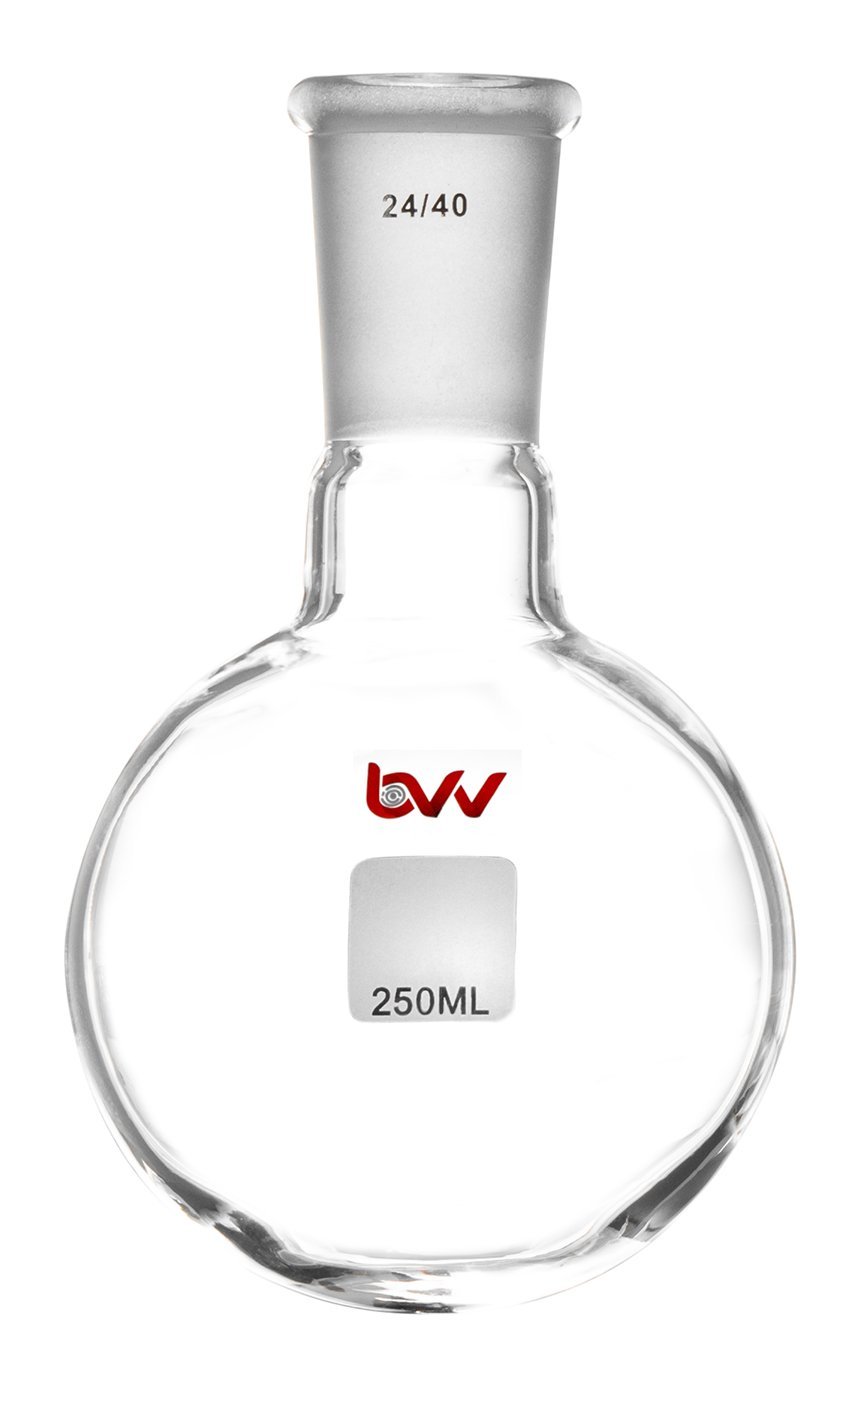 Single Neck Round Bottom Flask Shop All Categories BVV 50ml